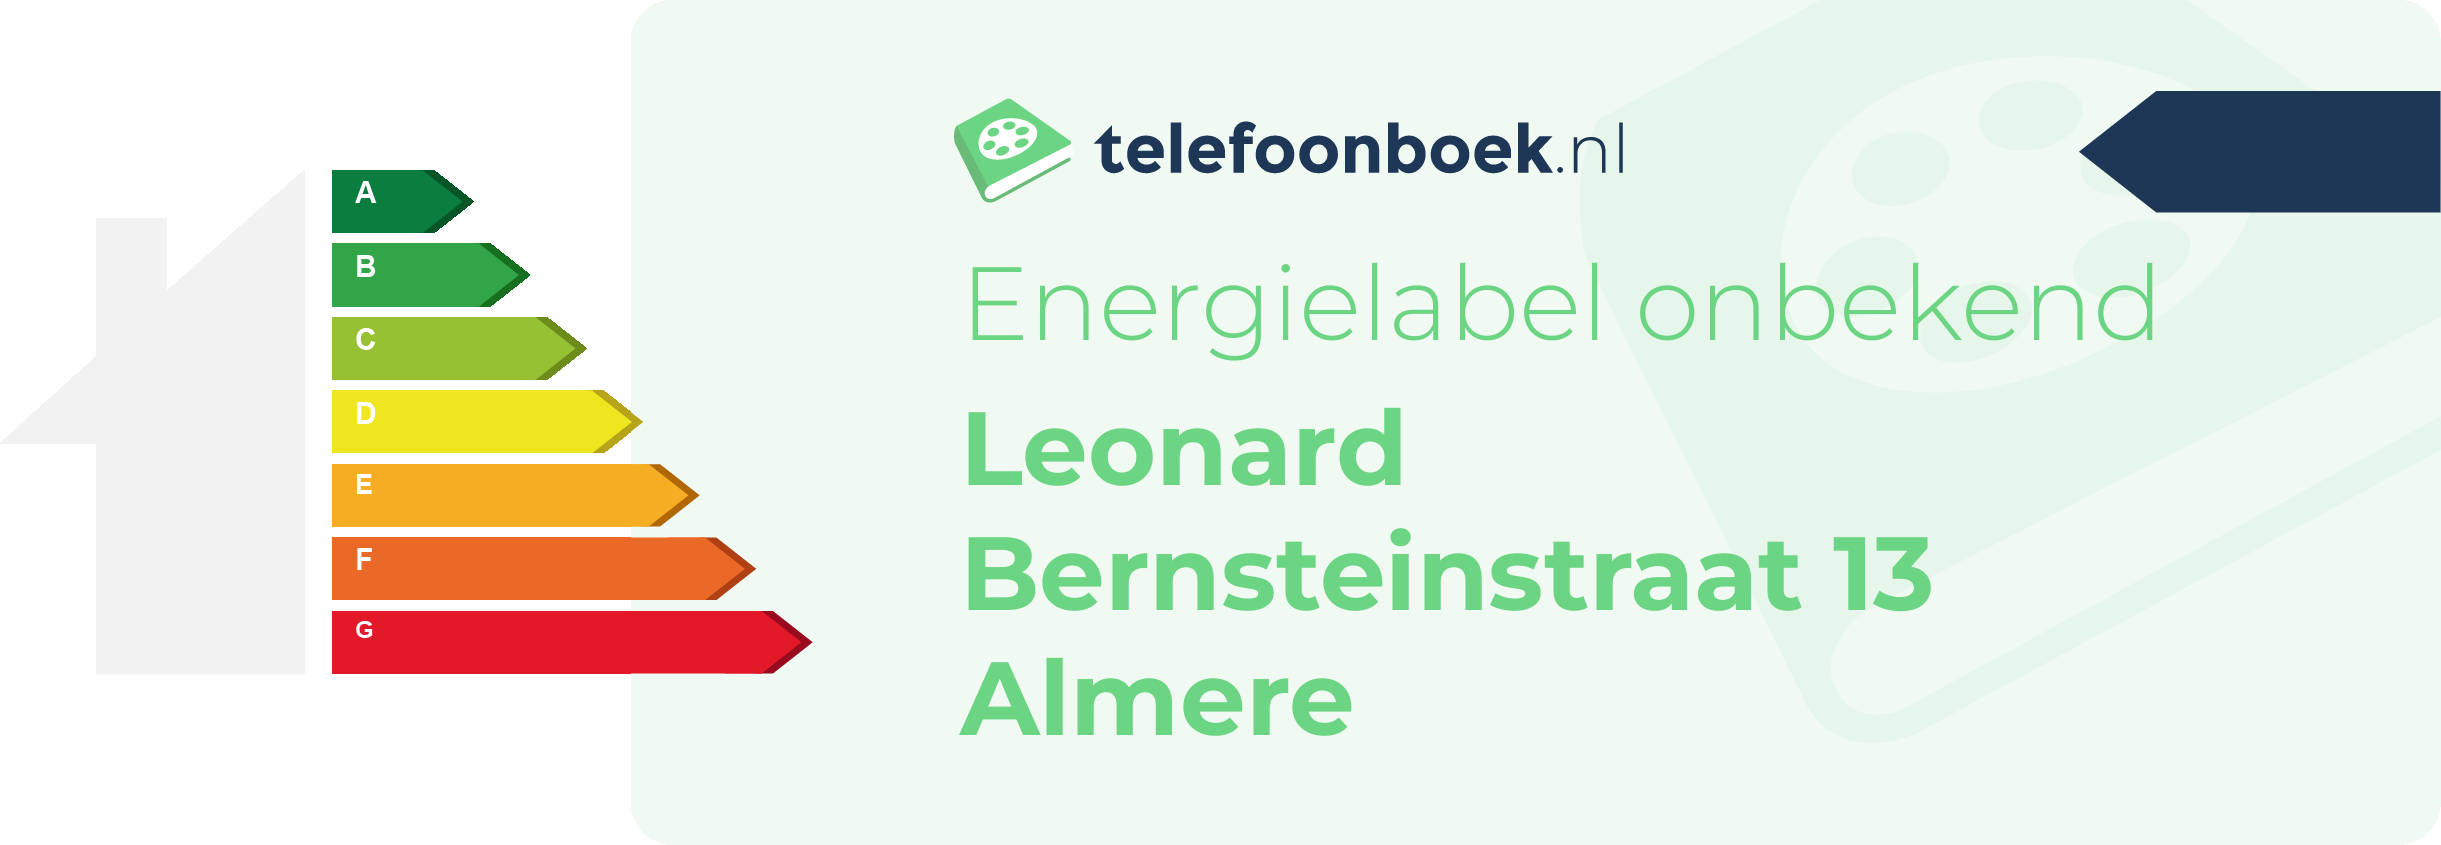 Energielabel Leonard Bernsteinstraat 13 Almere